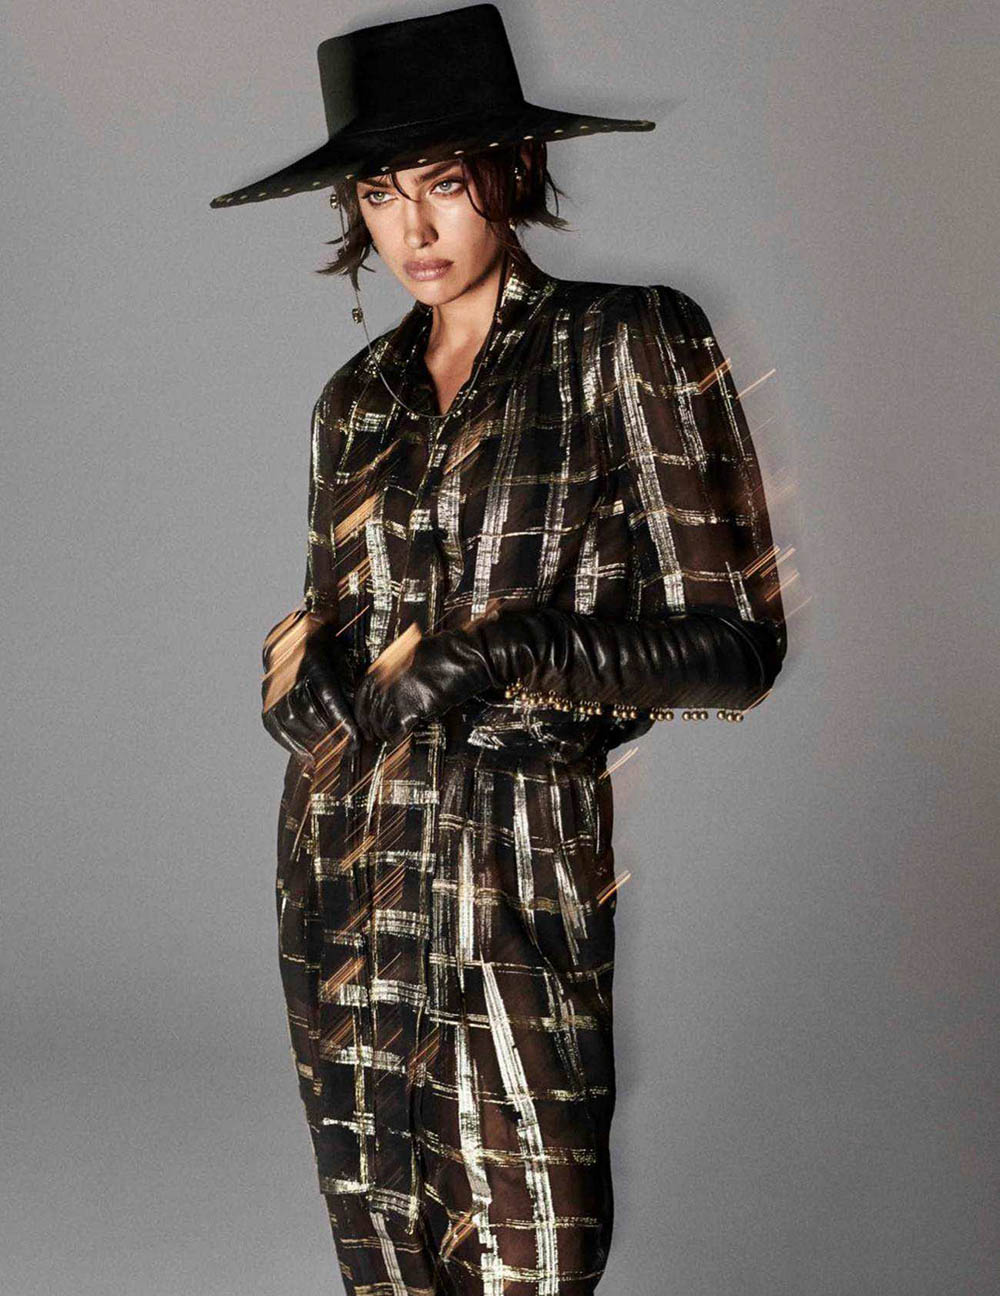 Irina Shayk covers Vogue Spain September 2018 by Giampaolo Sgura